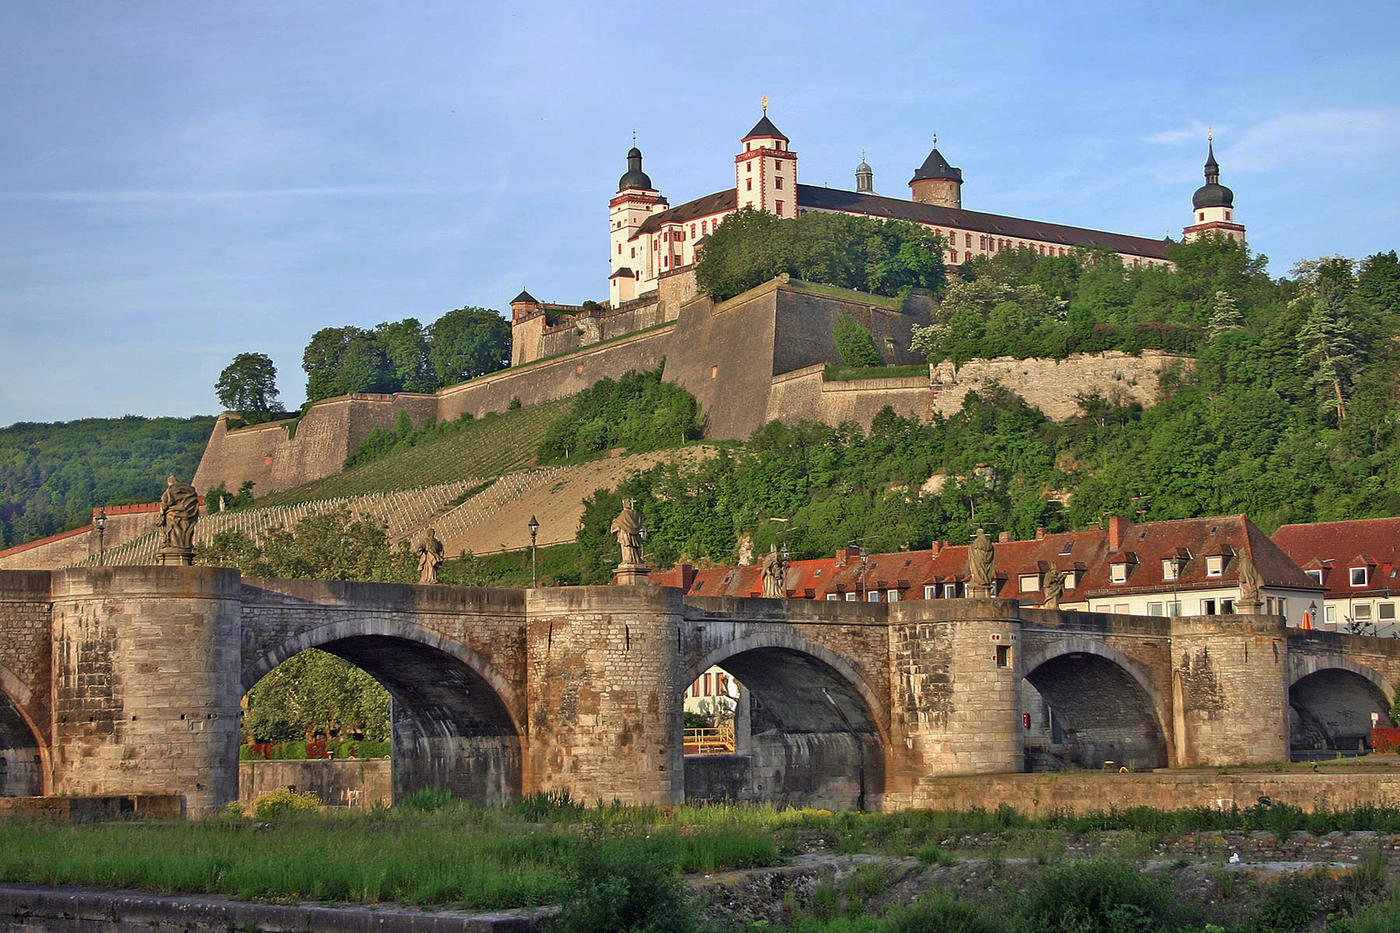 Würzburg: Discover a jewel of Franconia